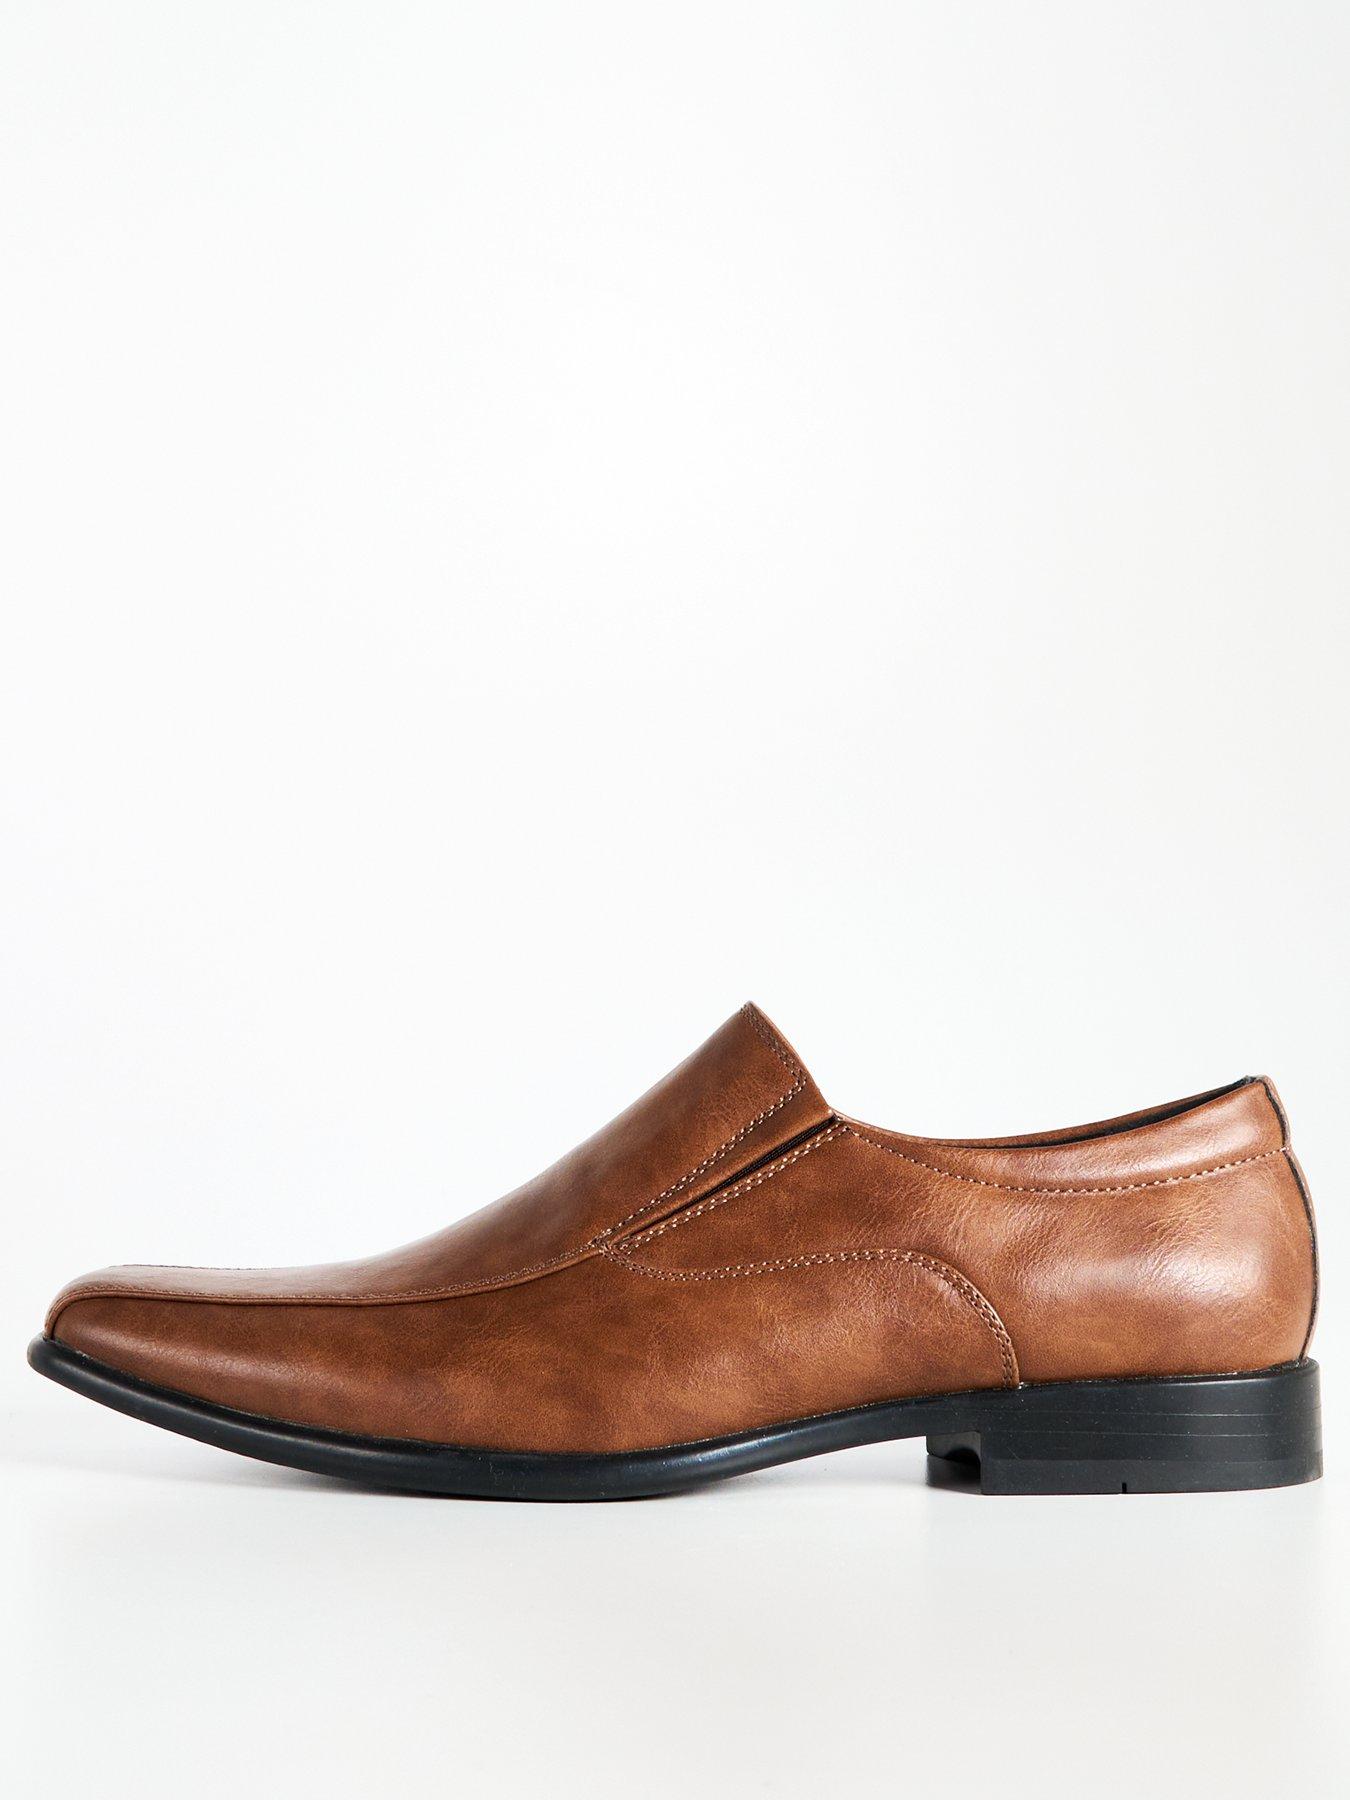 Everyday Mens Formal Slip On Shoe - Standard - Brown